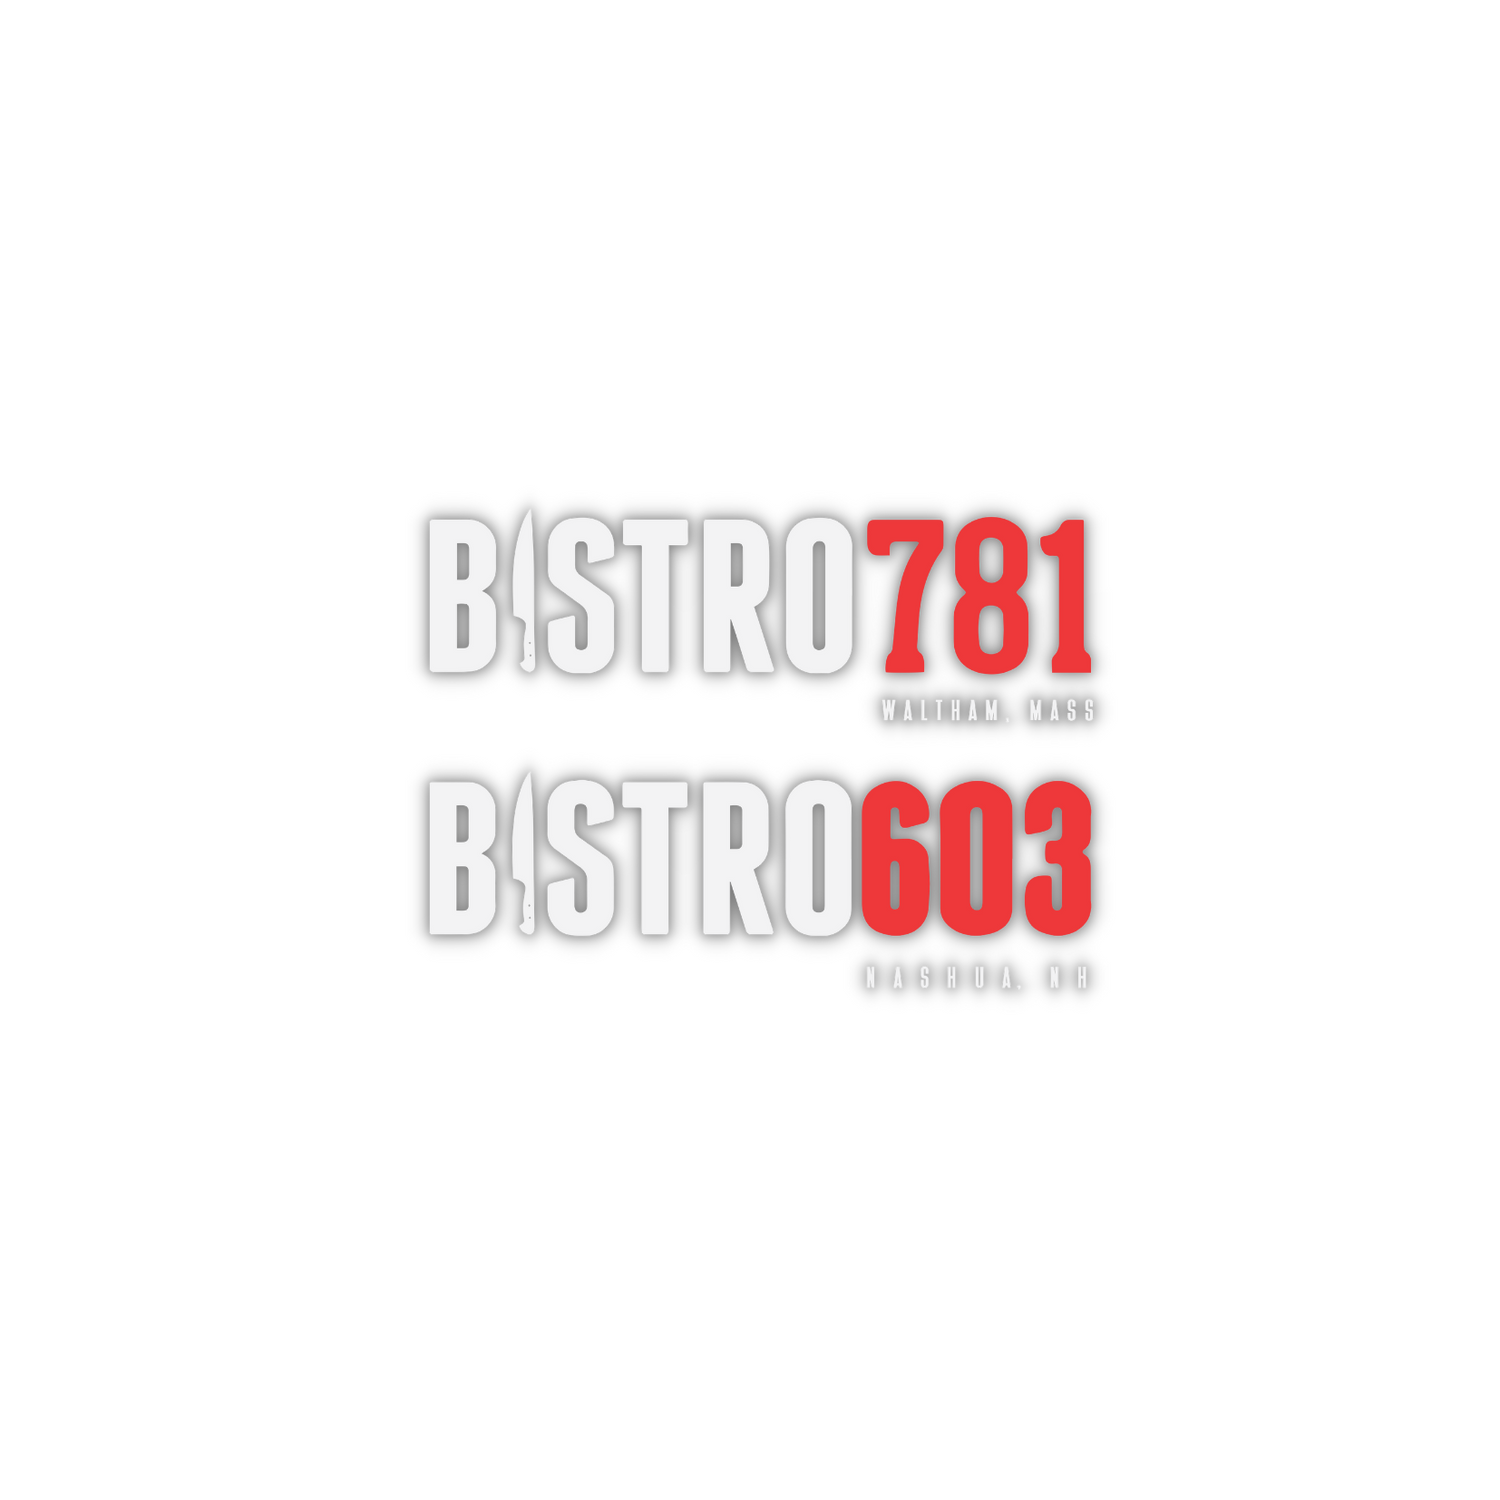 Bistro781 & Bistro603